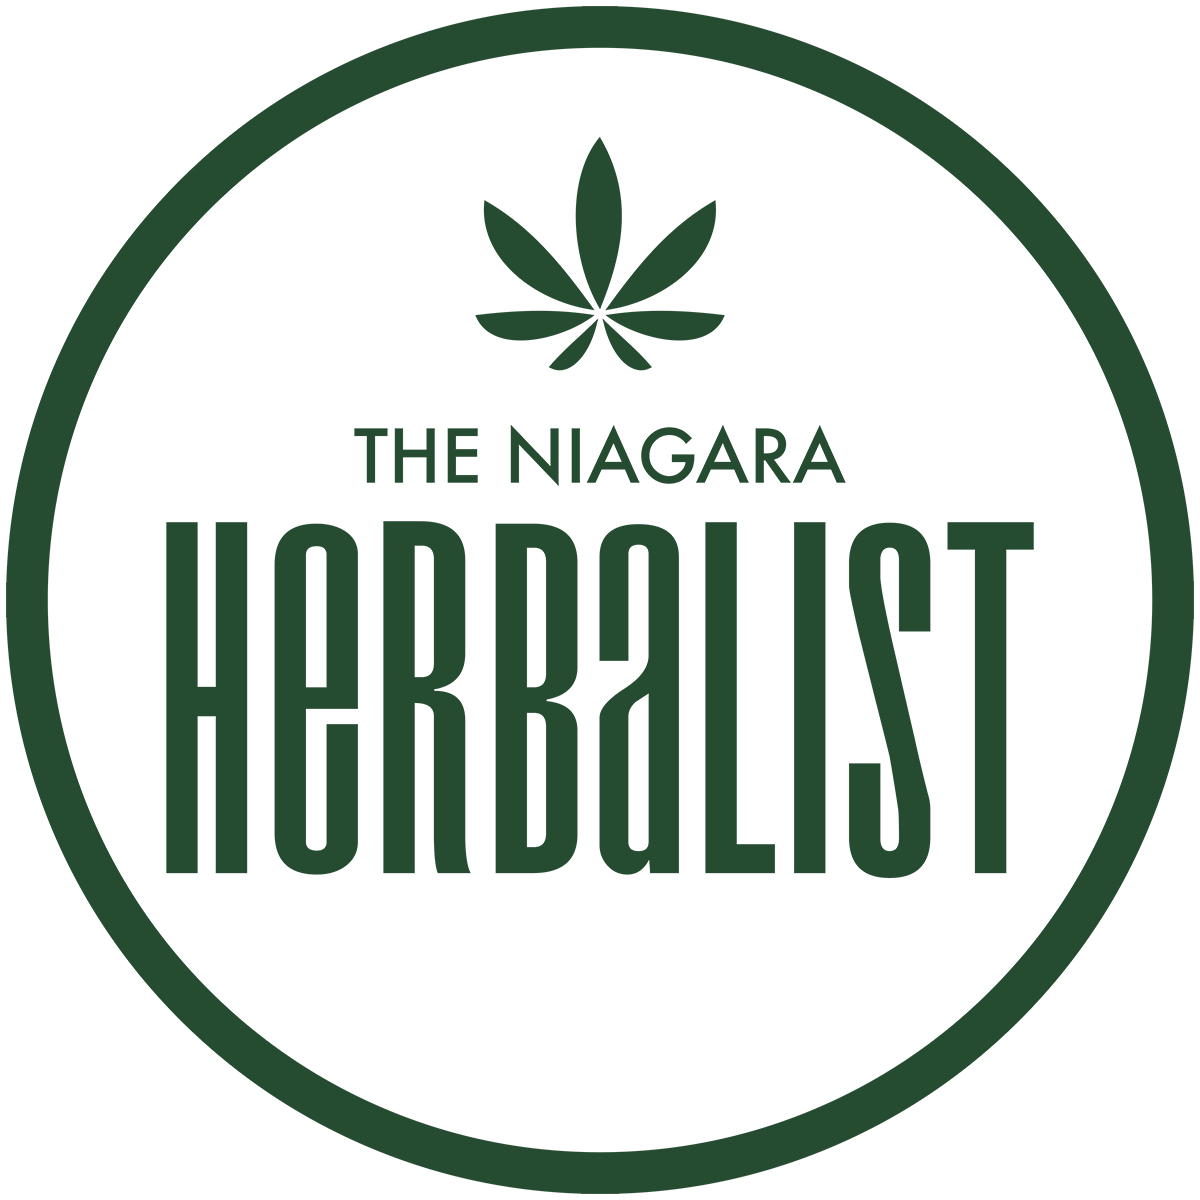 The Niagara Herbalist